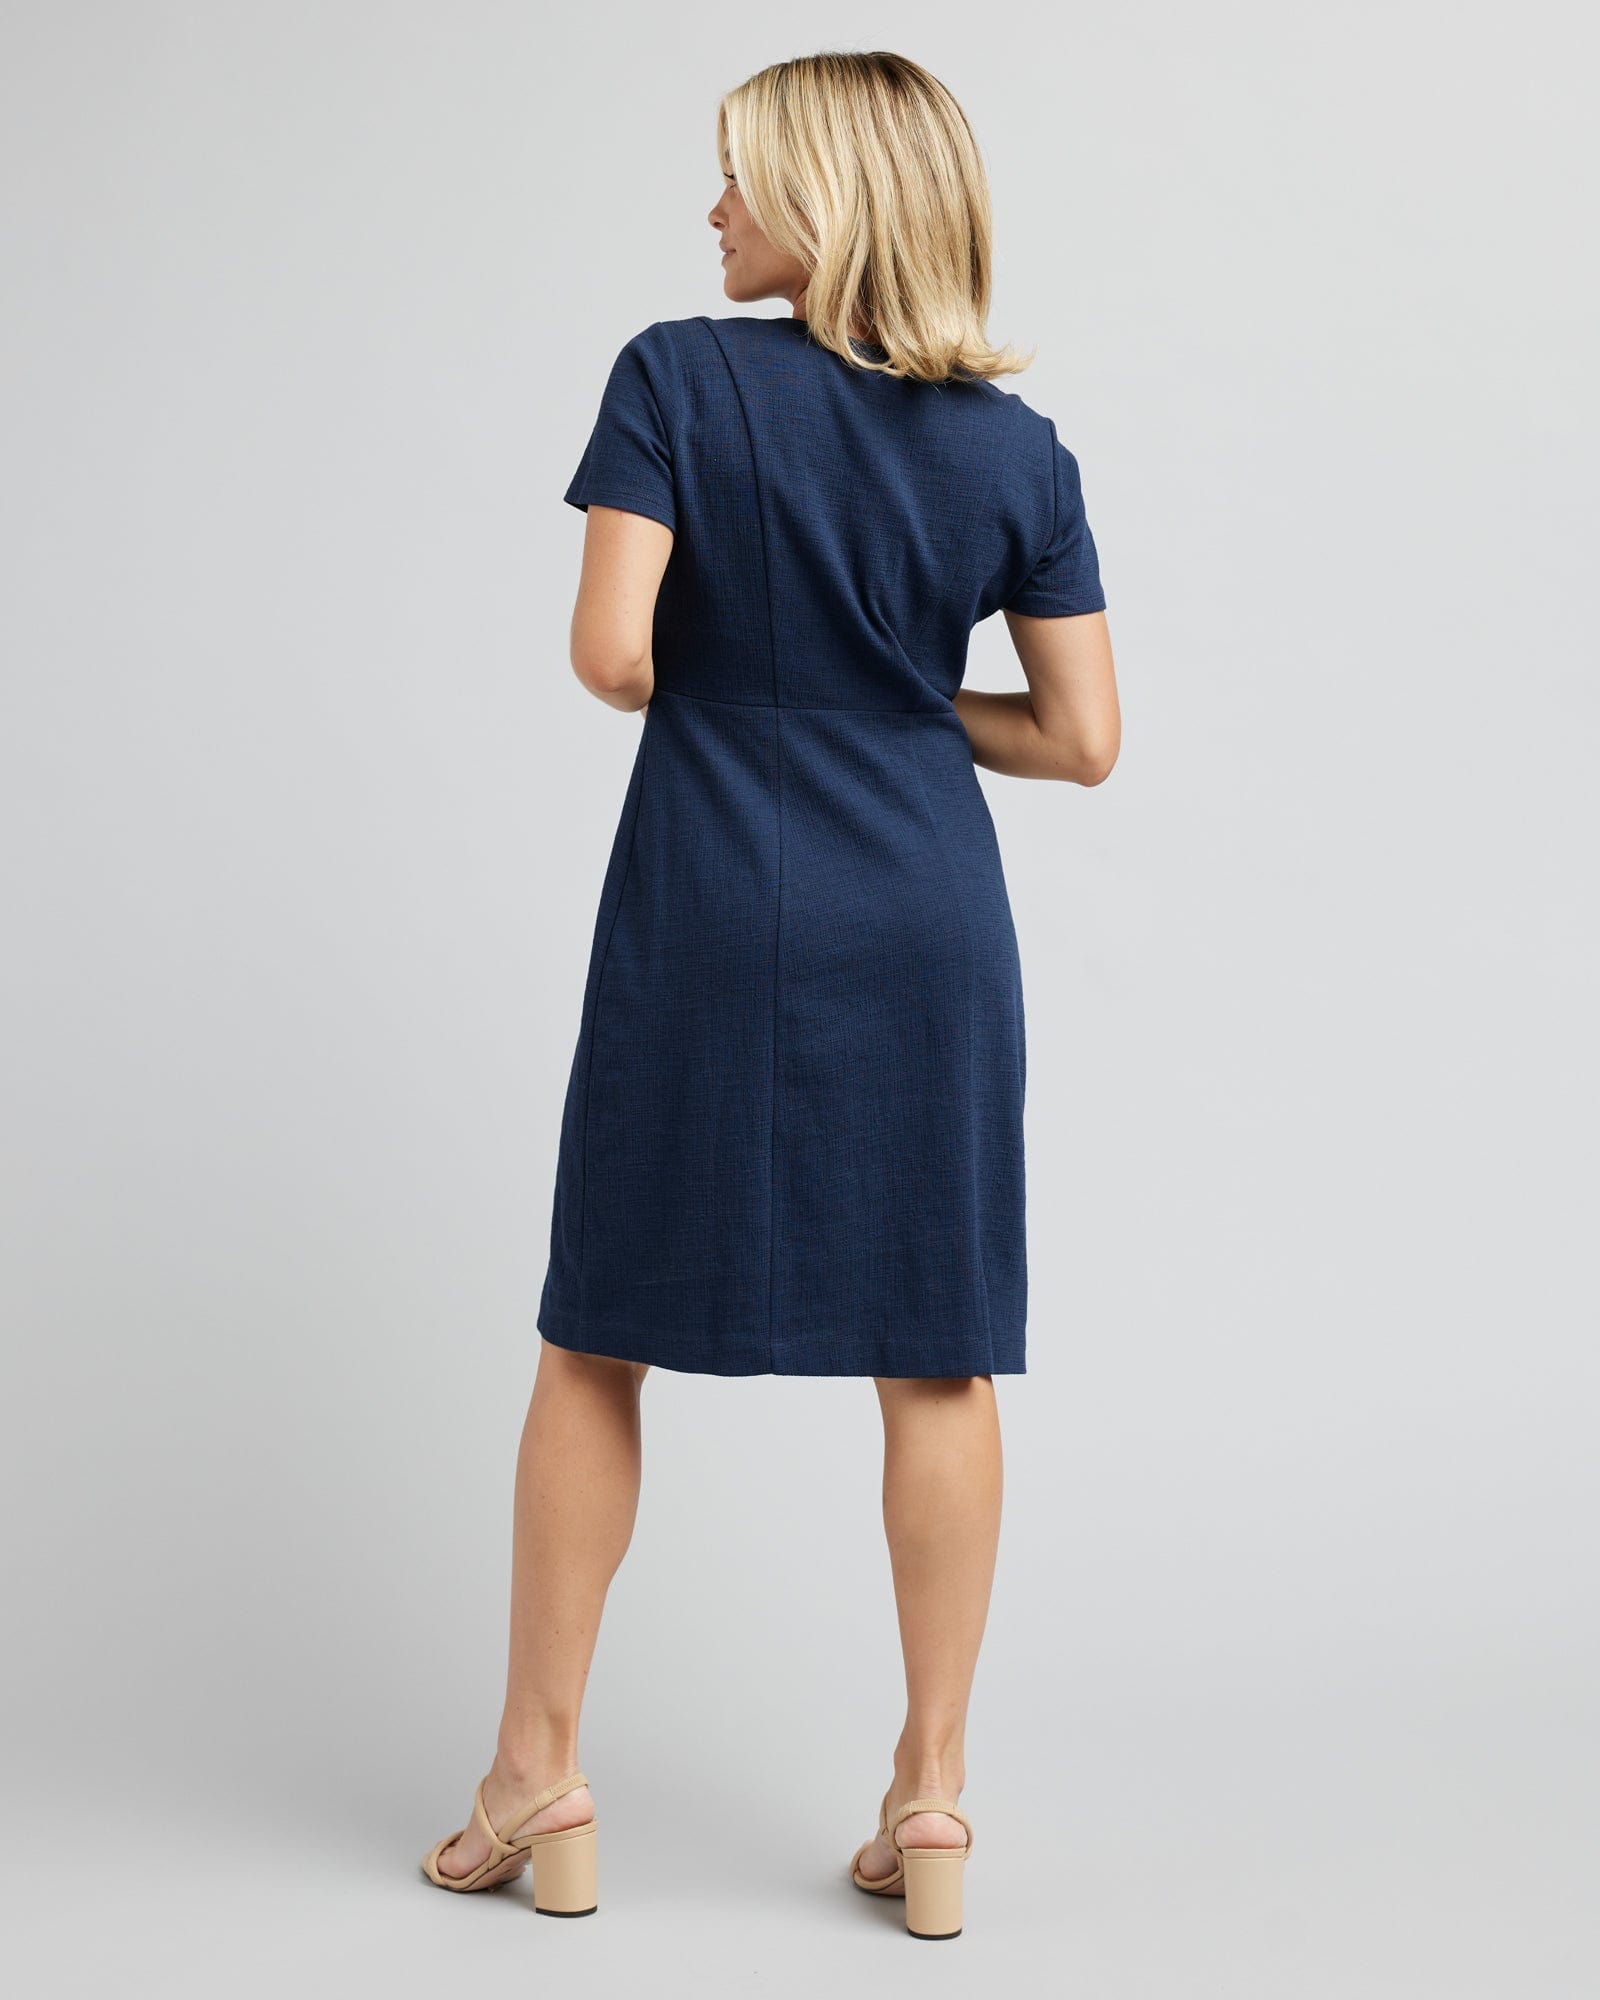 Woman in a short sleeve, knee-length, navy dress